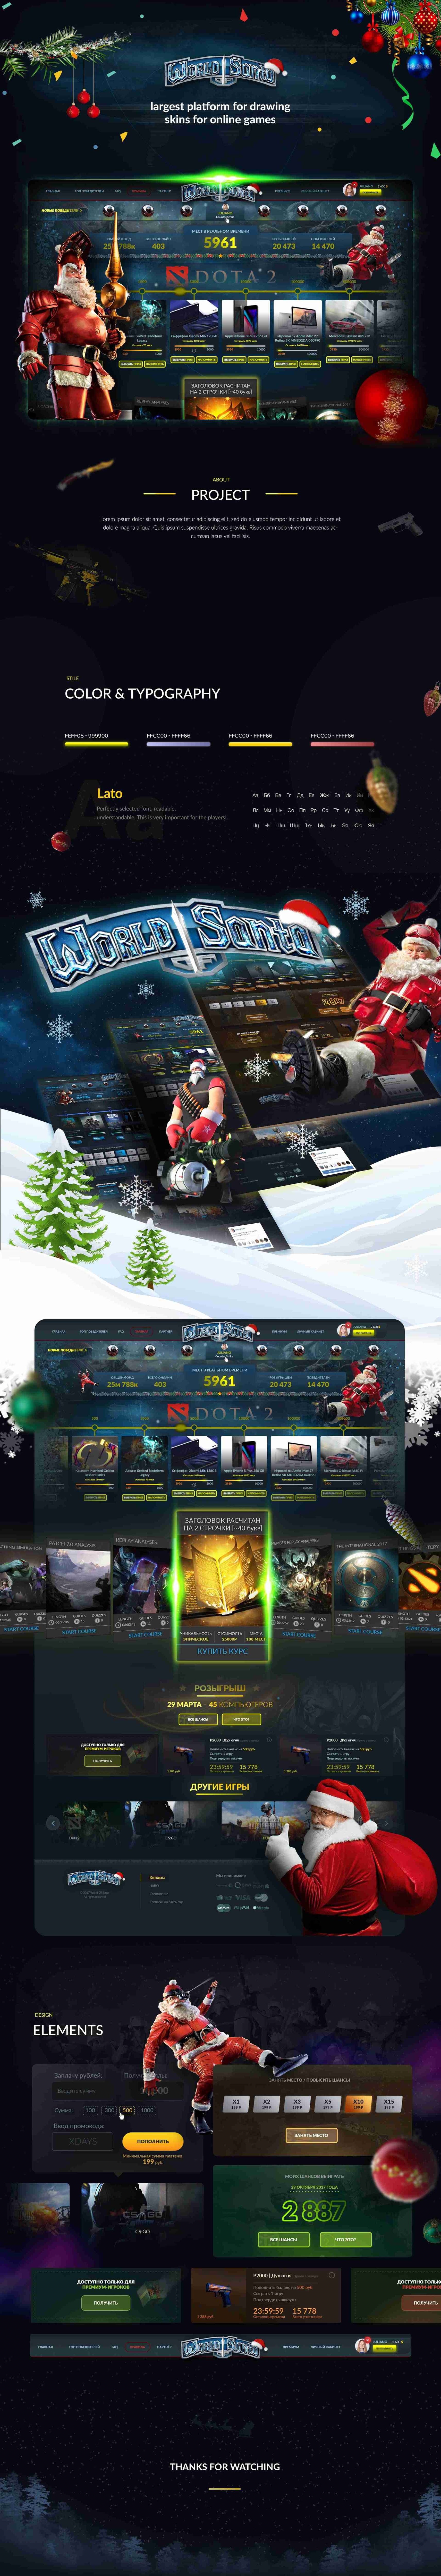 Gamer lottery project - World of Santa